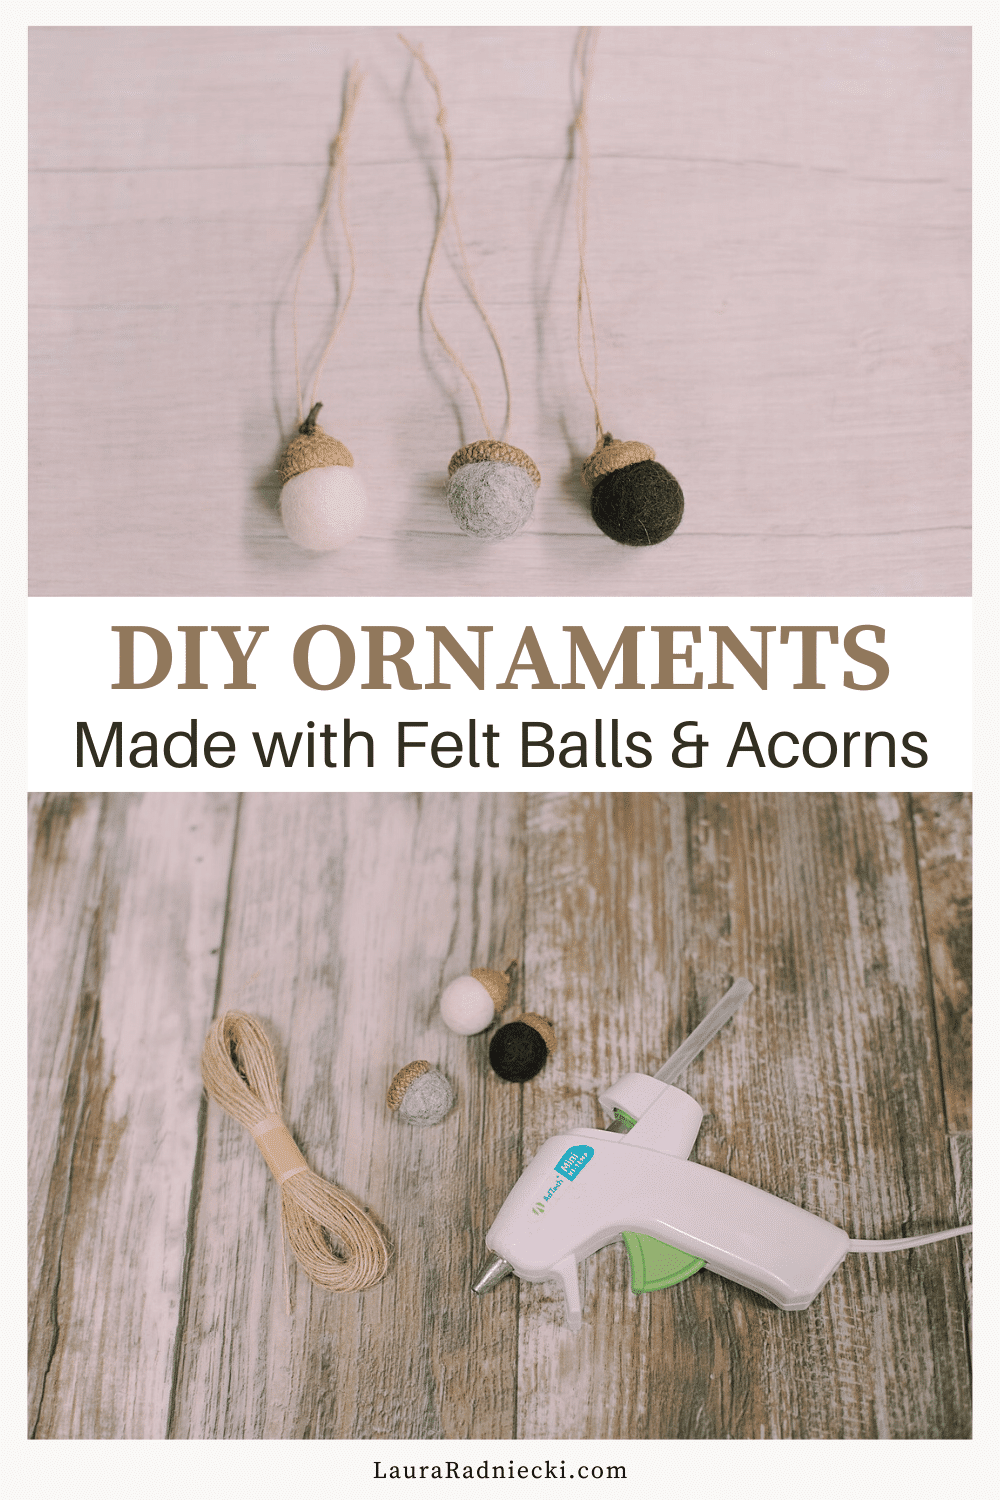 How to Make Felt Ball Acorn Ornaments